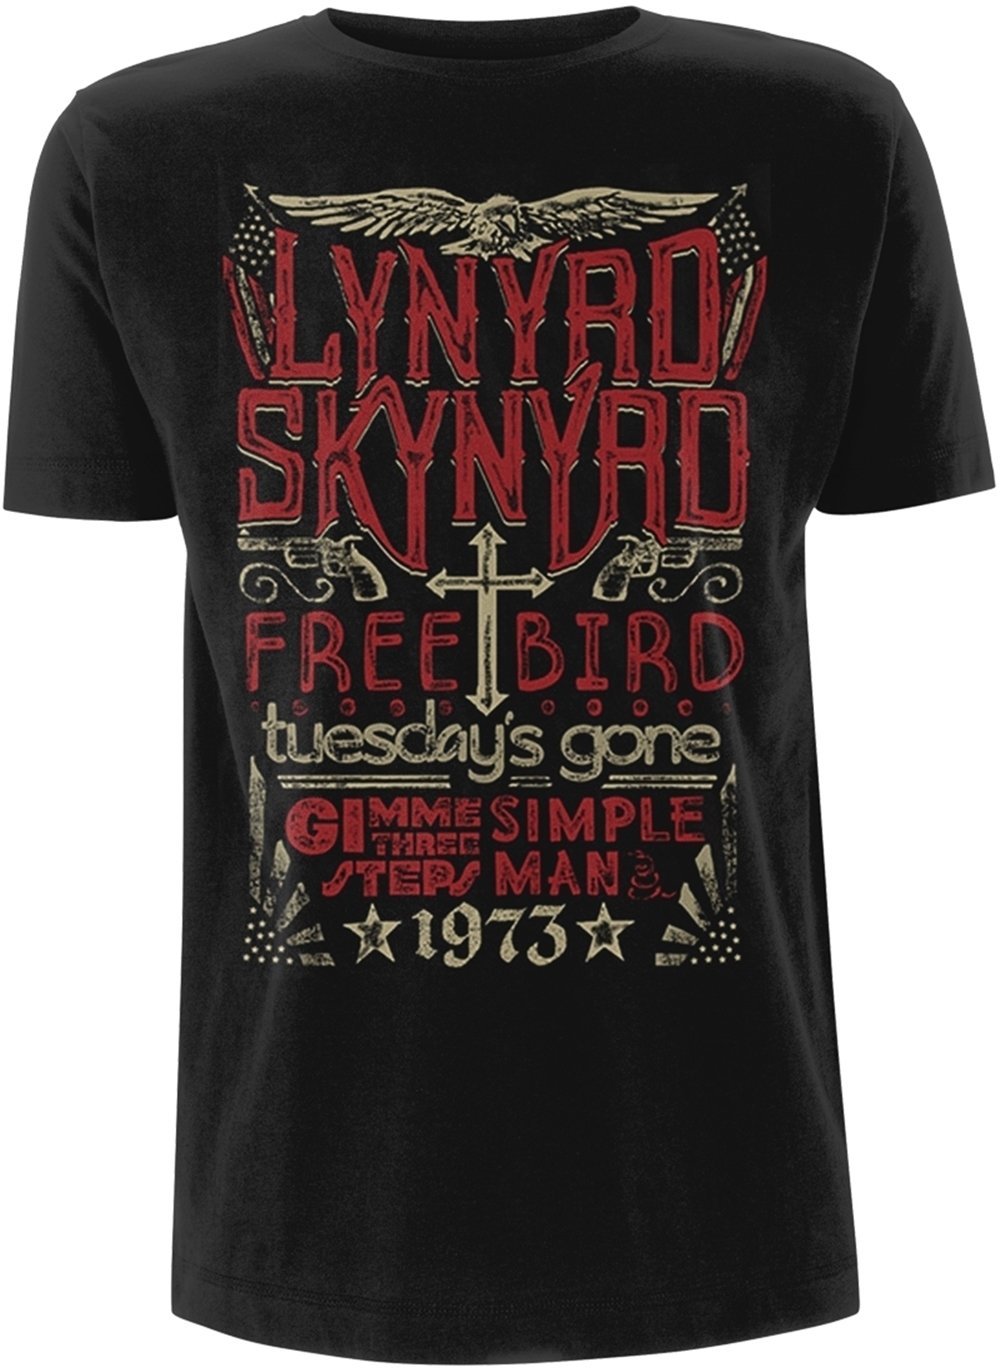 T-shirt Lynyrd Skynyrd T-shirt Freebird 1973 Hits Homme Black S